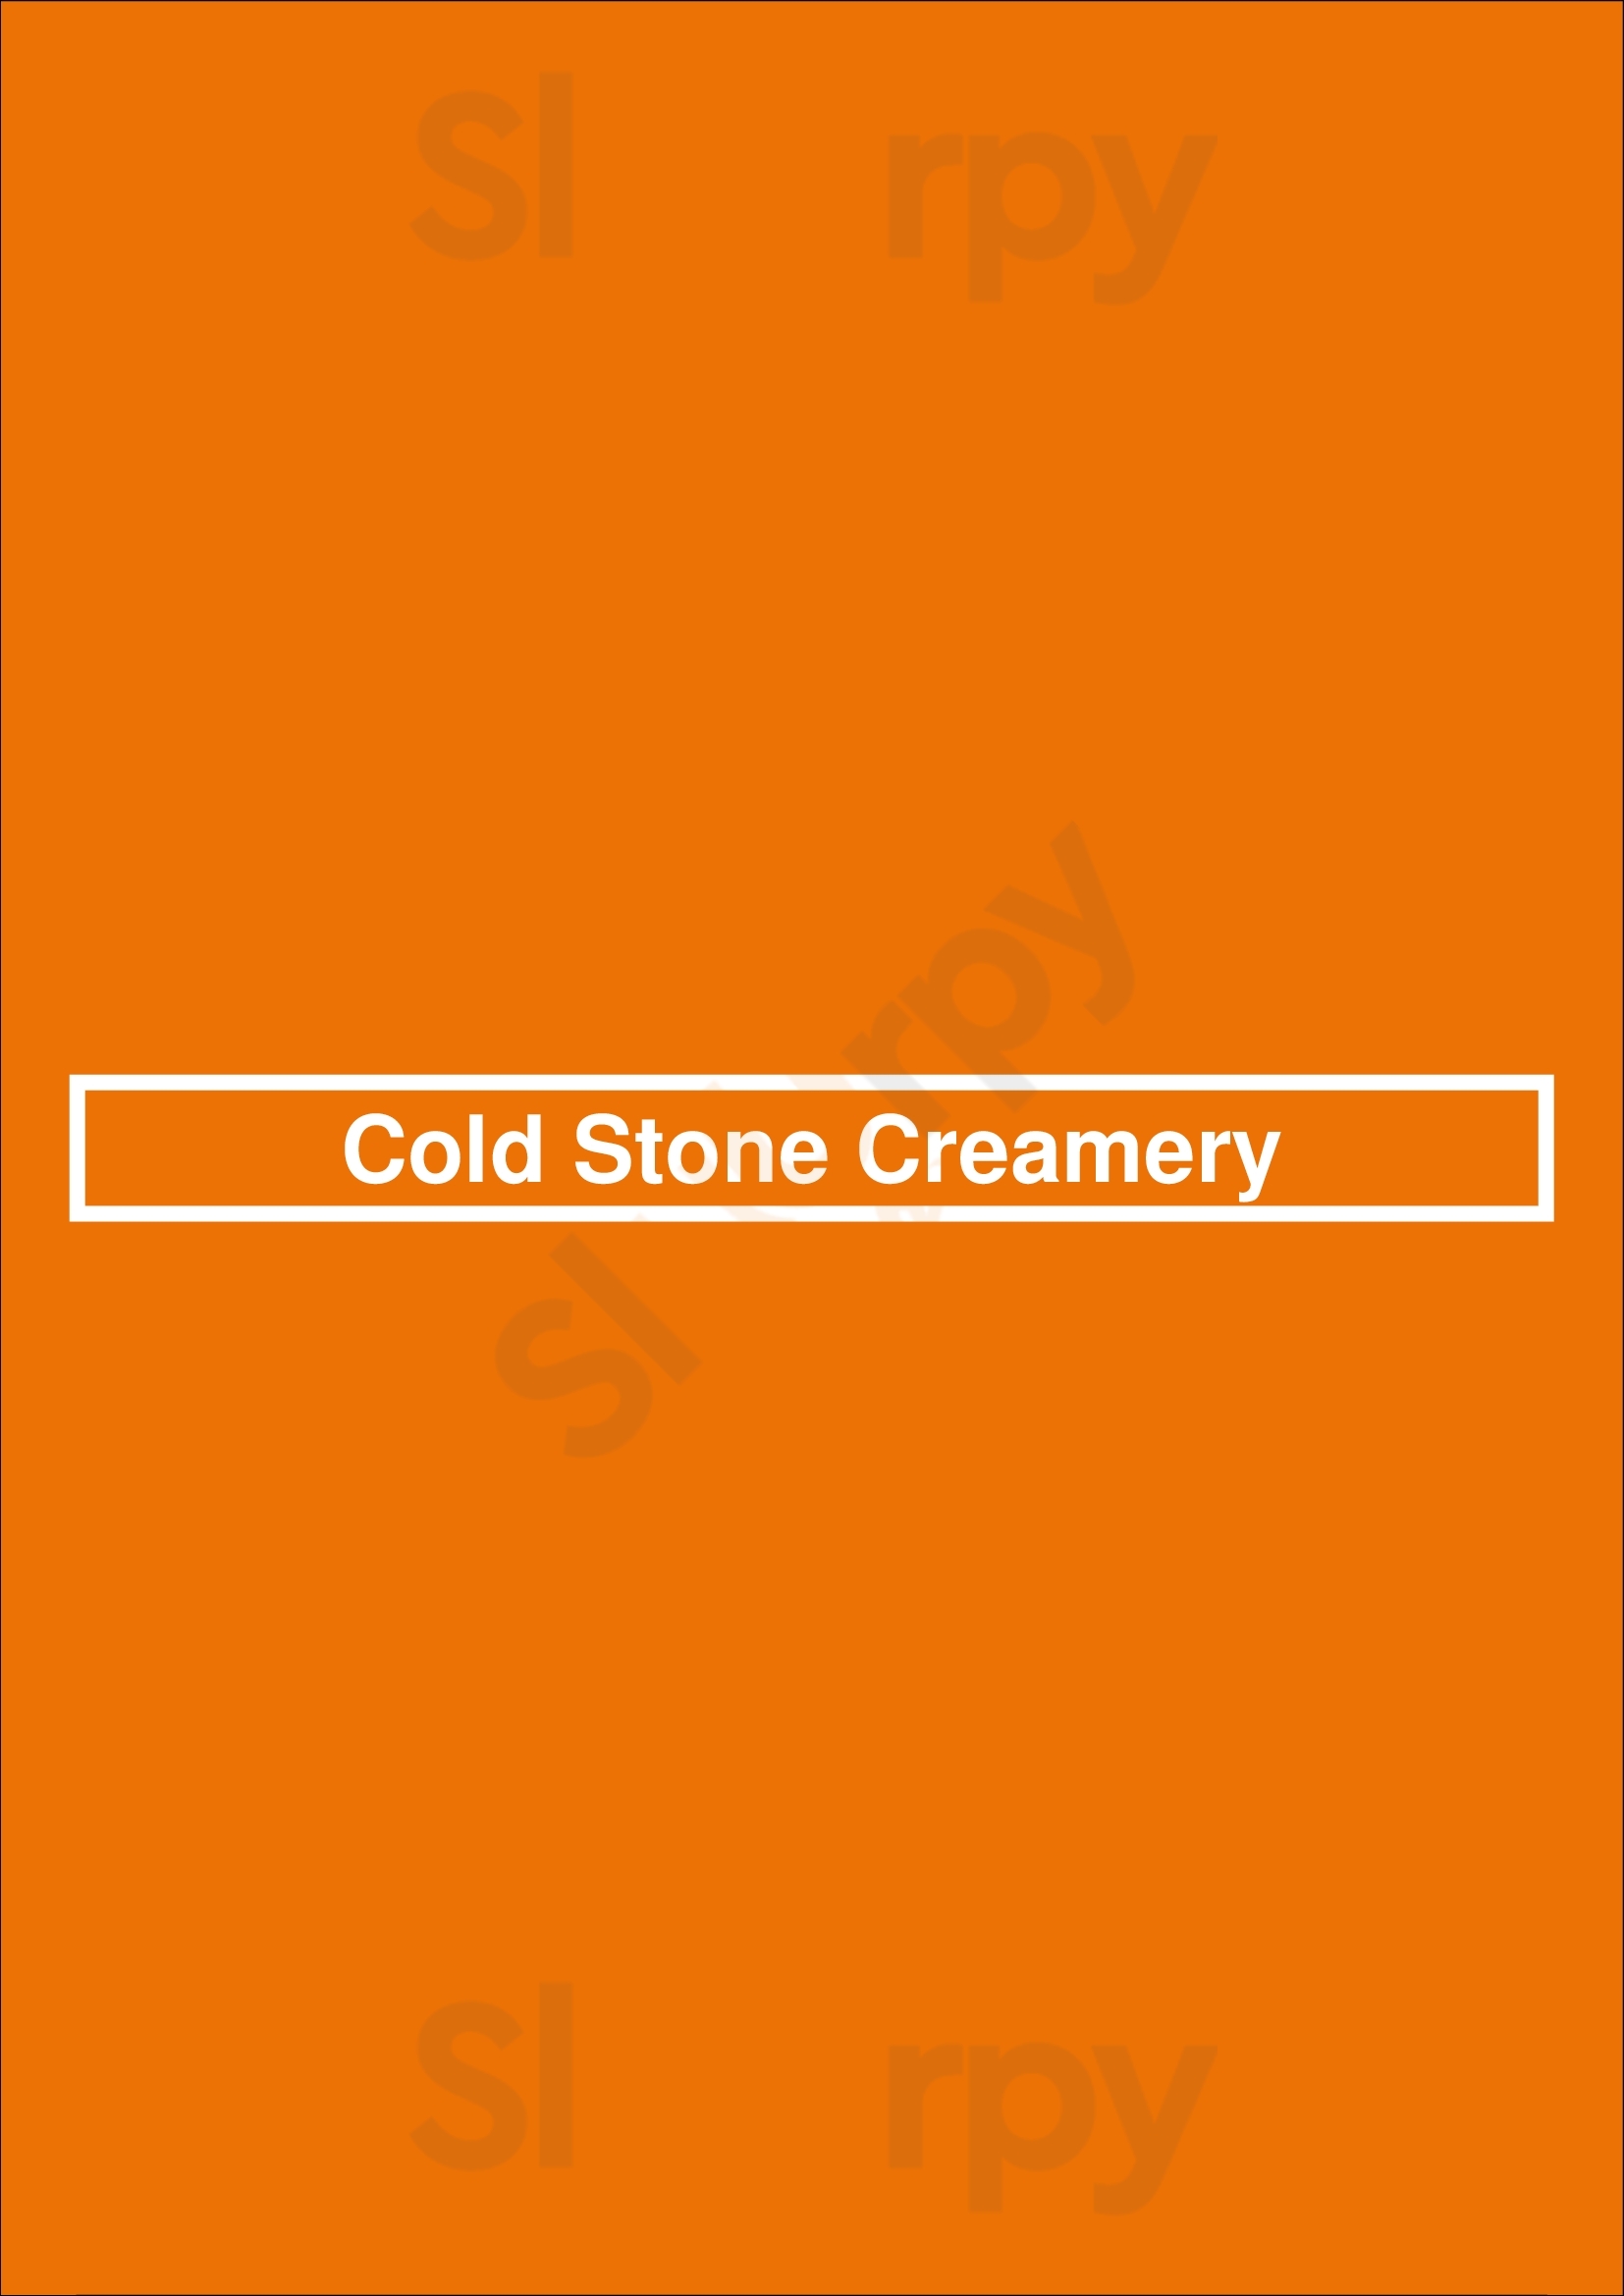 Cold Stone Creamery Detroit Menu - 1